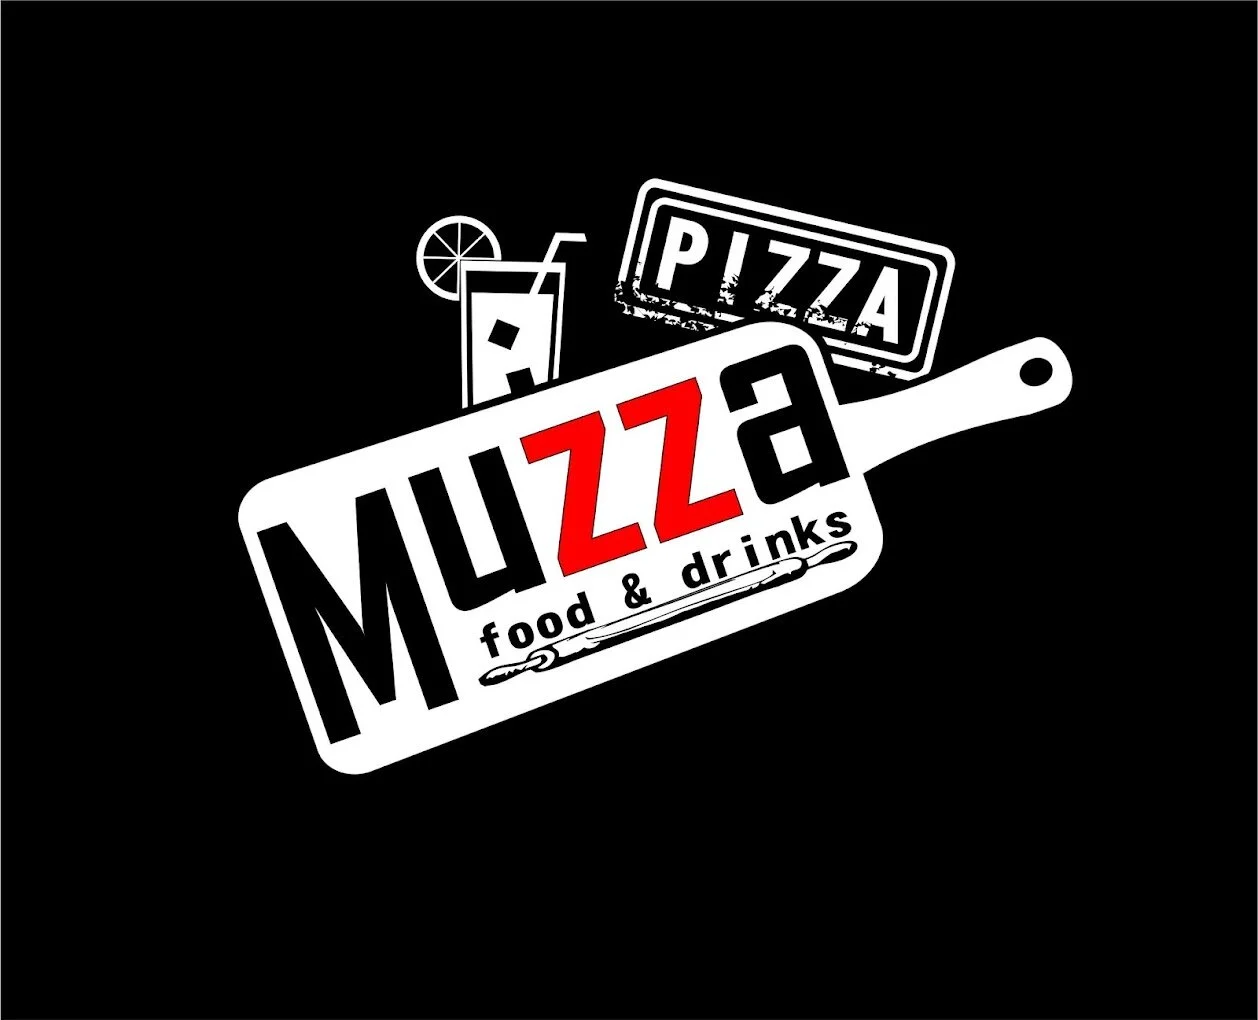 Restaurantes-muzza-food-drinks-19687